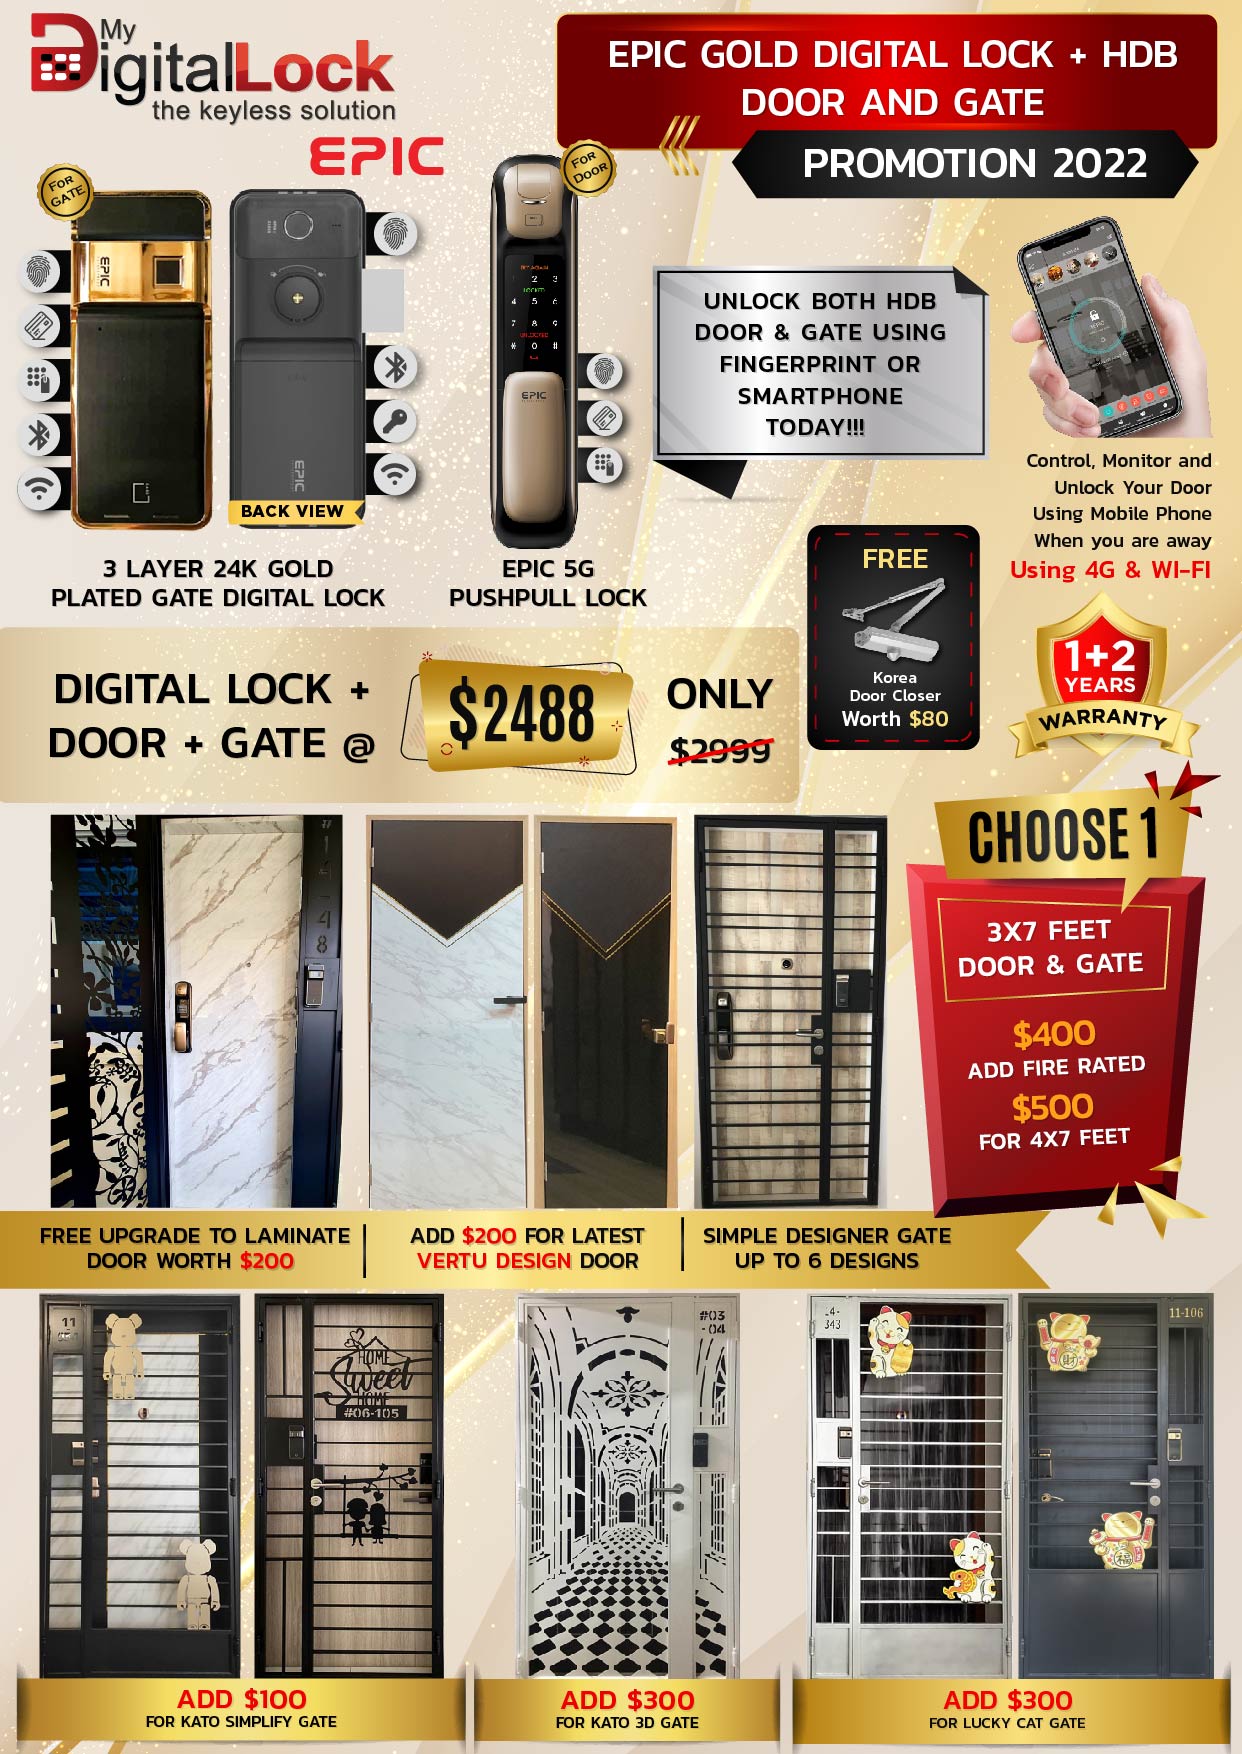 Epic Gold Digital Lock + HDB Door And Gate